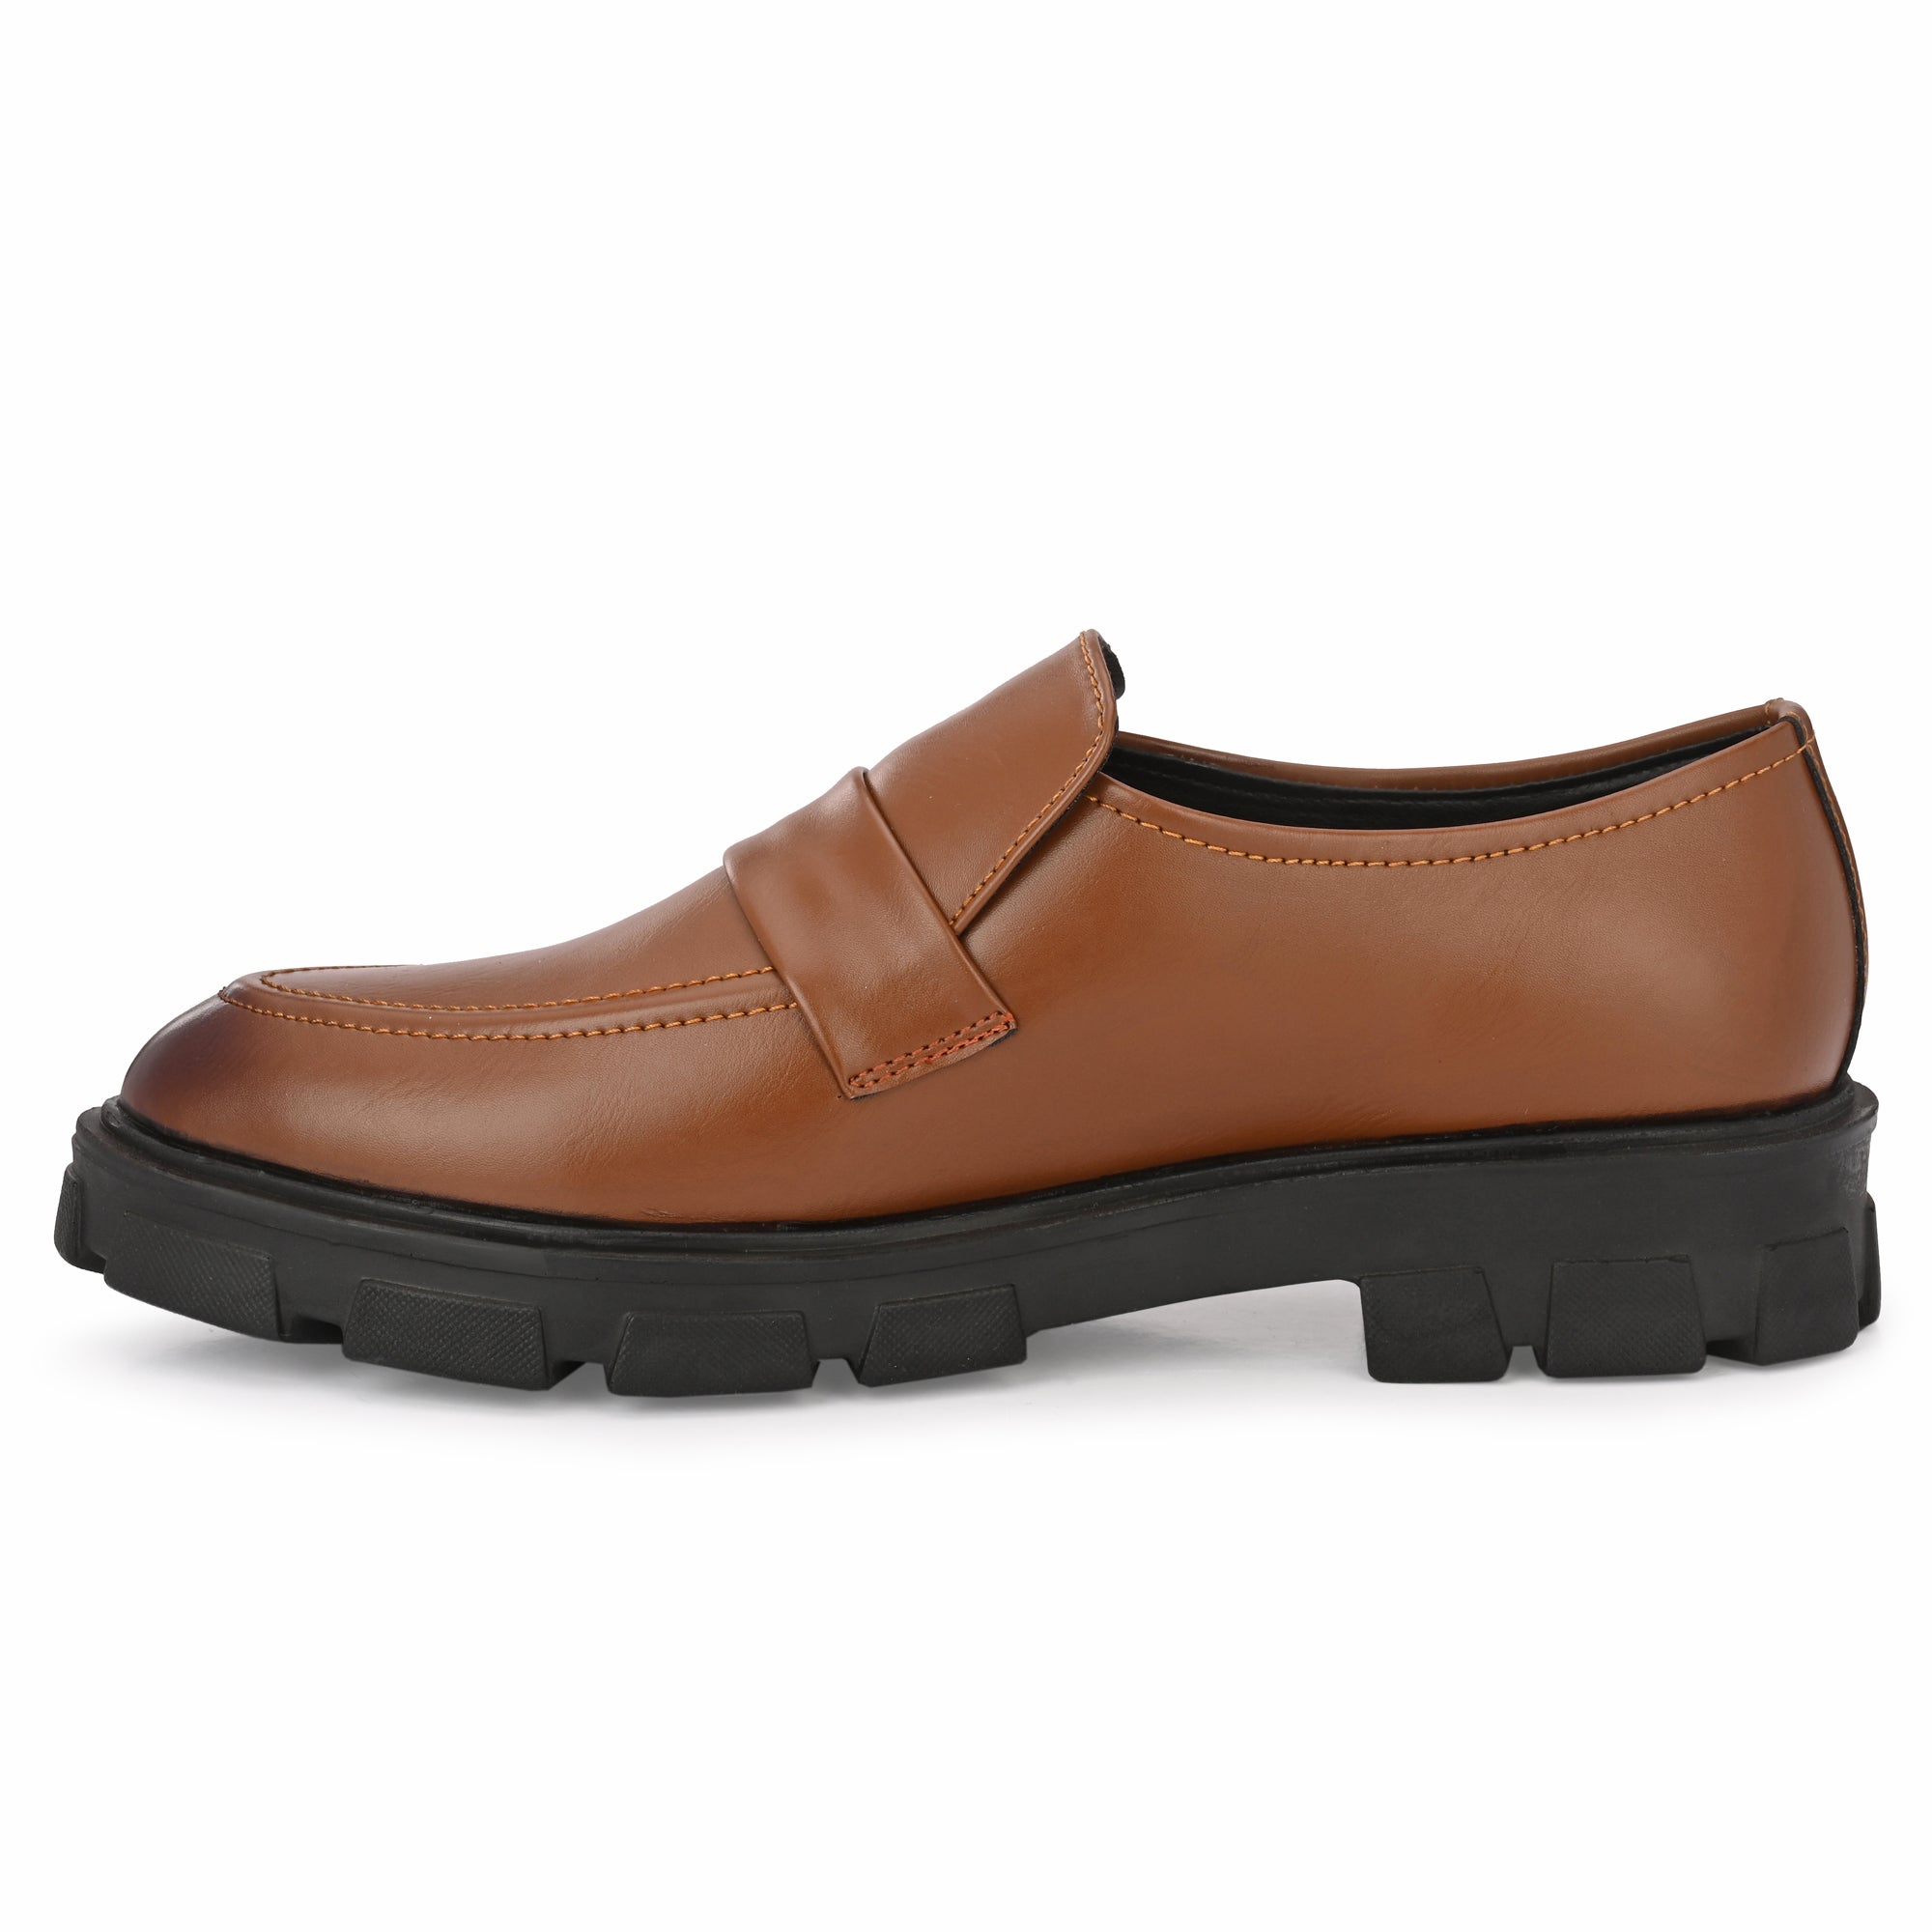 attitudist-tan-high-heel-slip-on-penny-loafer-shoes-for-men